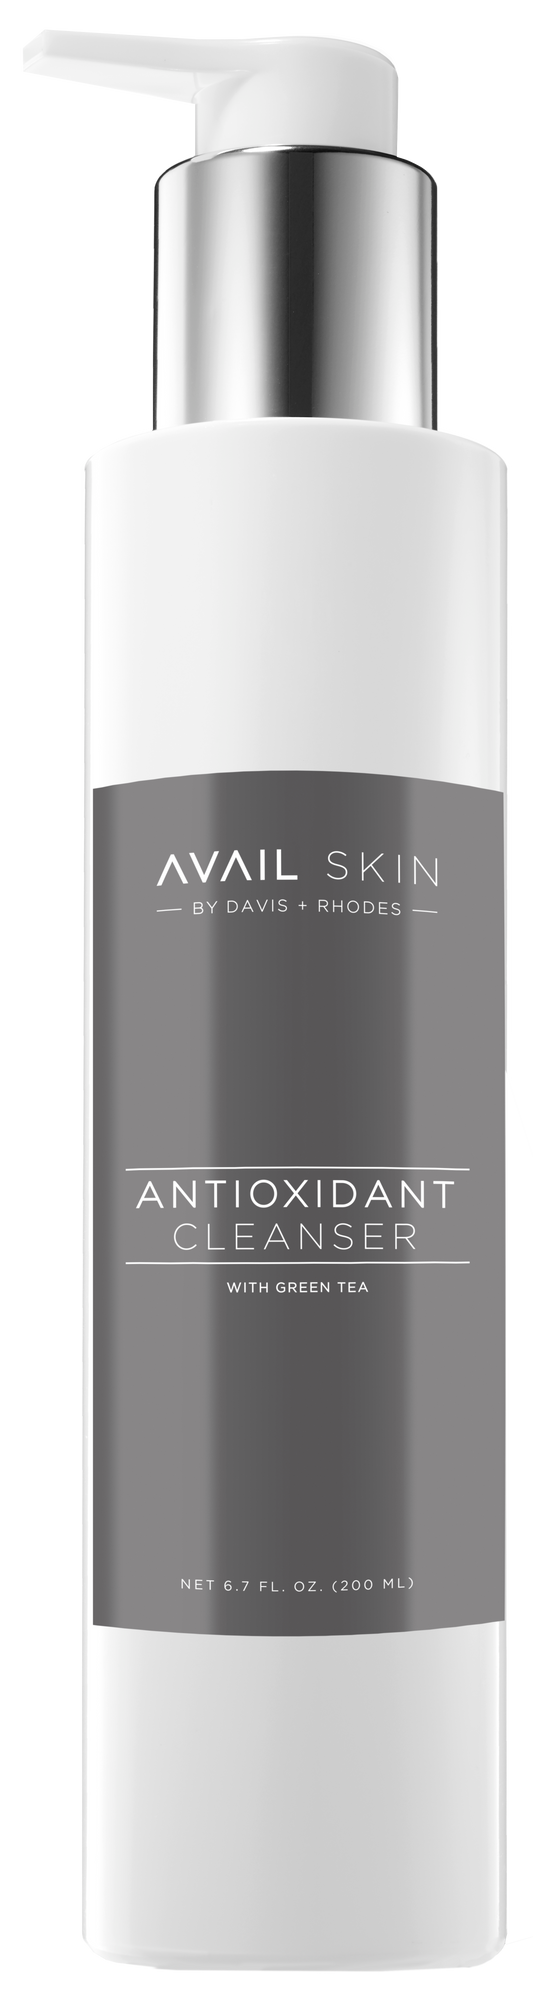 Antioxidant Cleanser